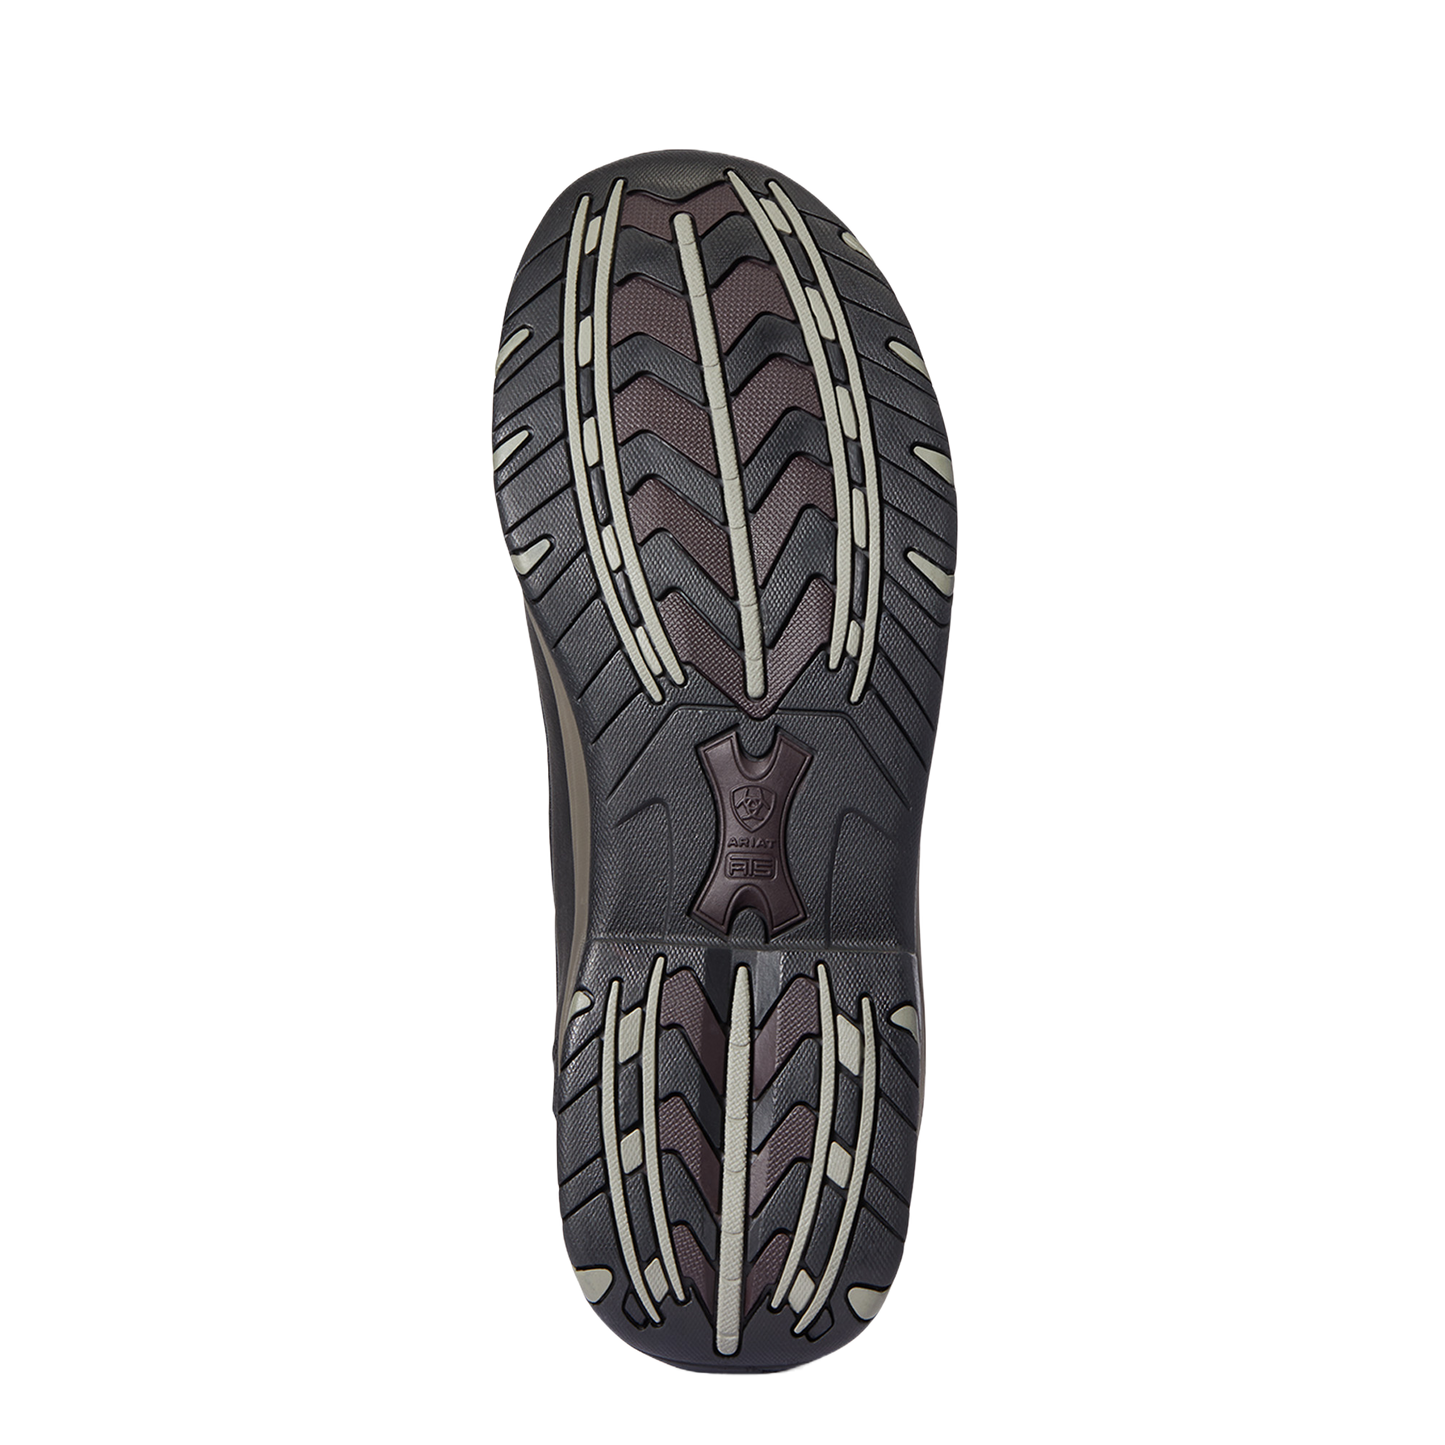 Ariat Men's Terrain Waterproof Black Lace Up Hiker Boots 10038425